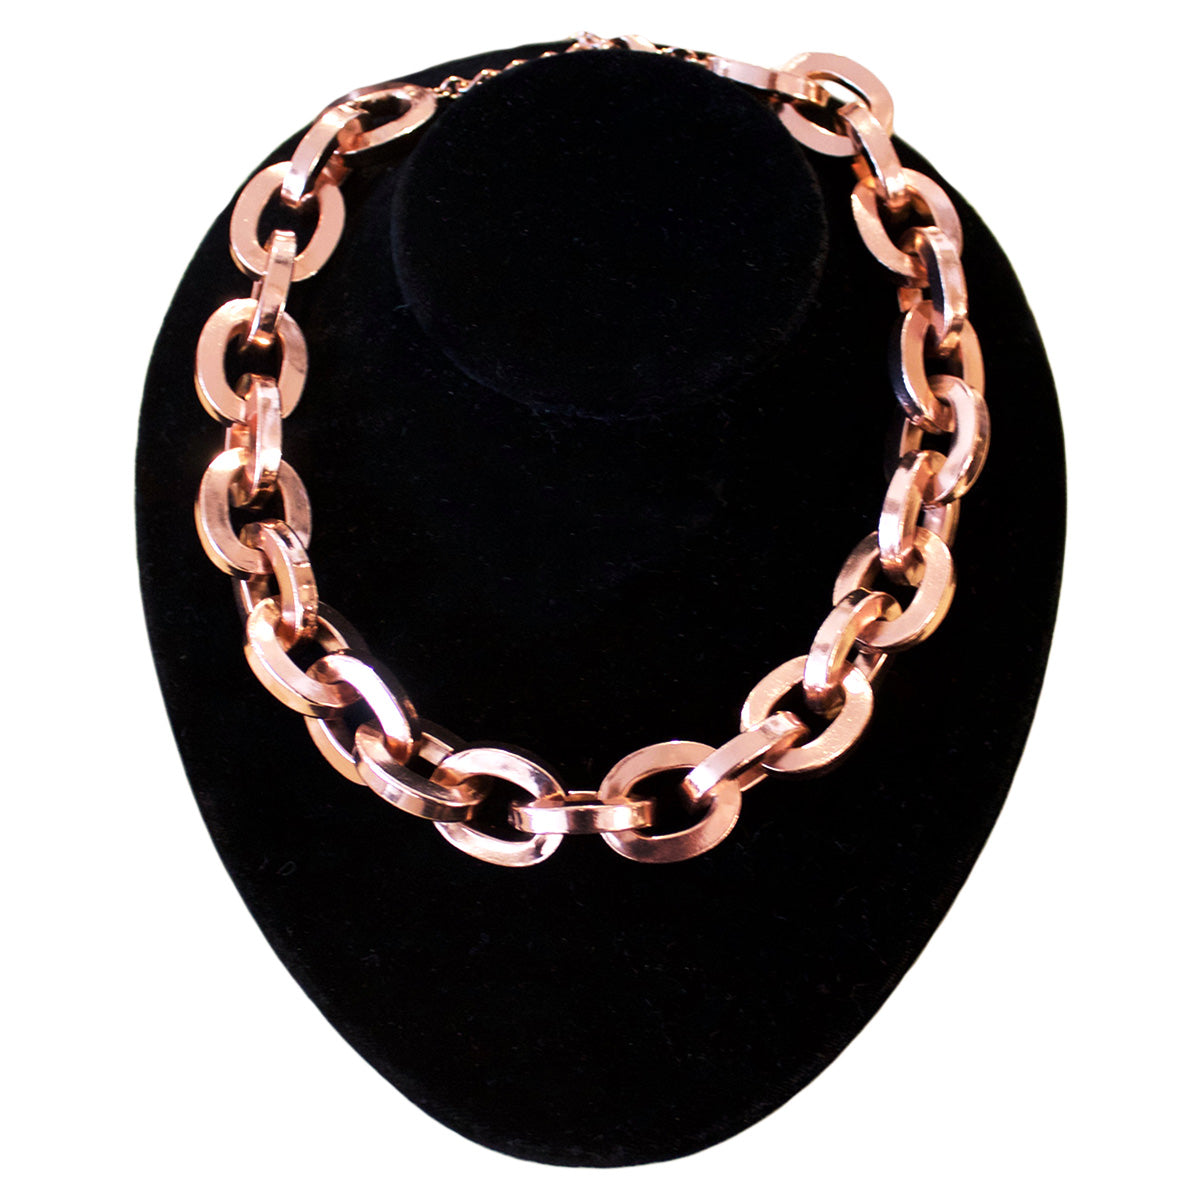 Poggi Paris rose gold metal link necklace.